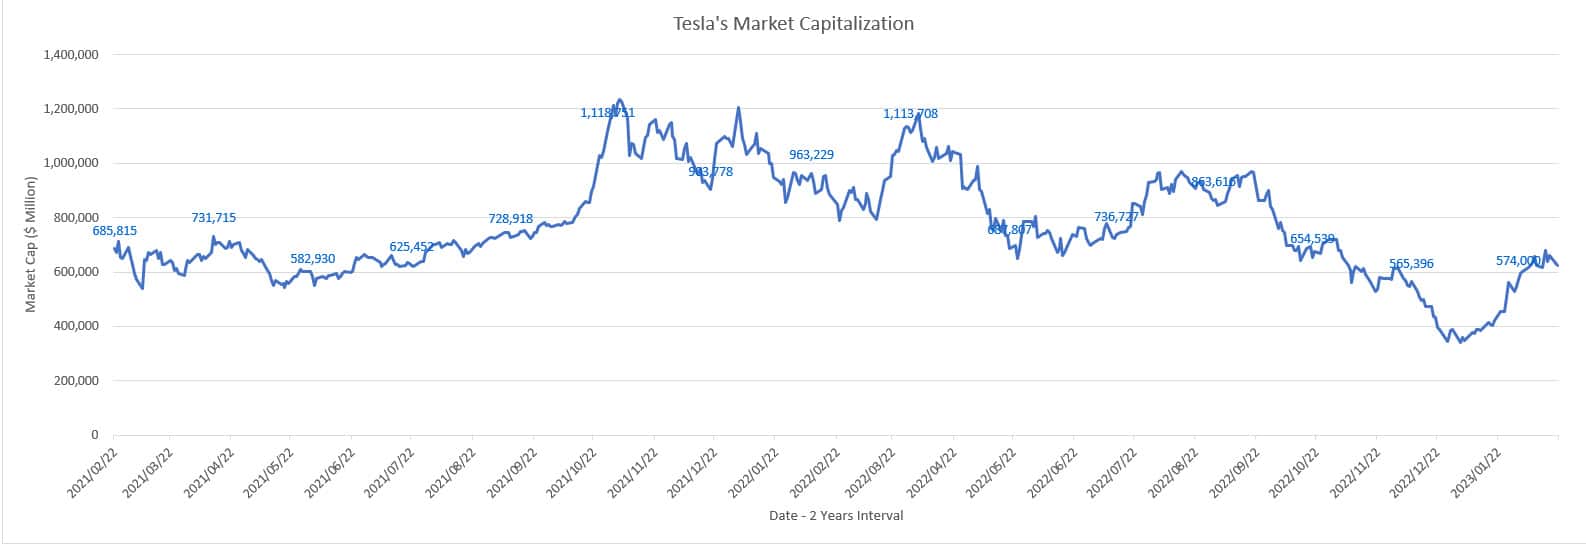 Tesla market capitalization